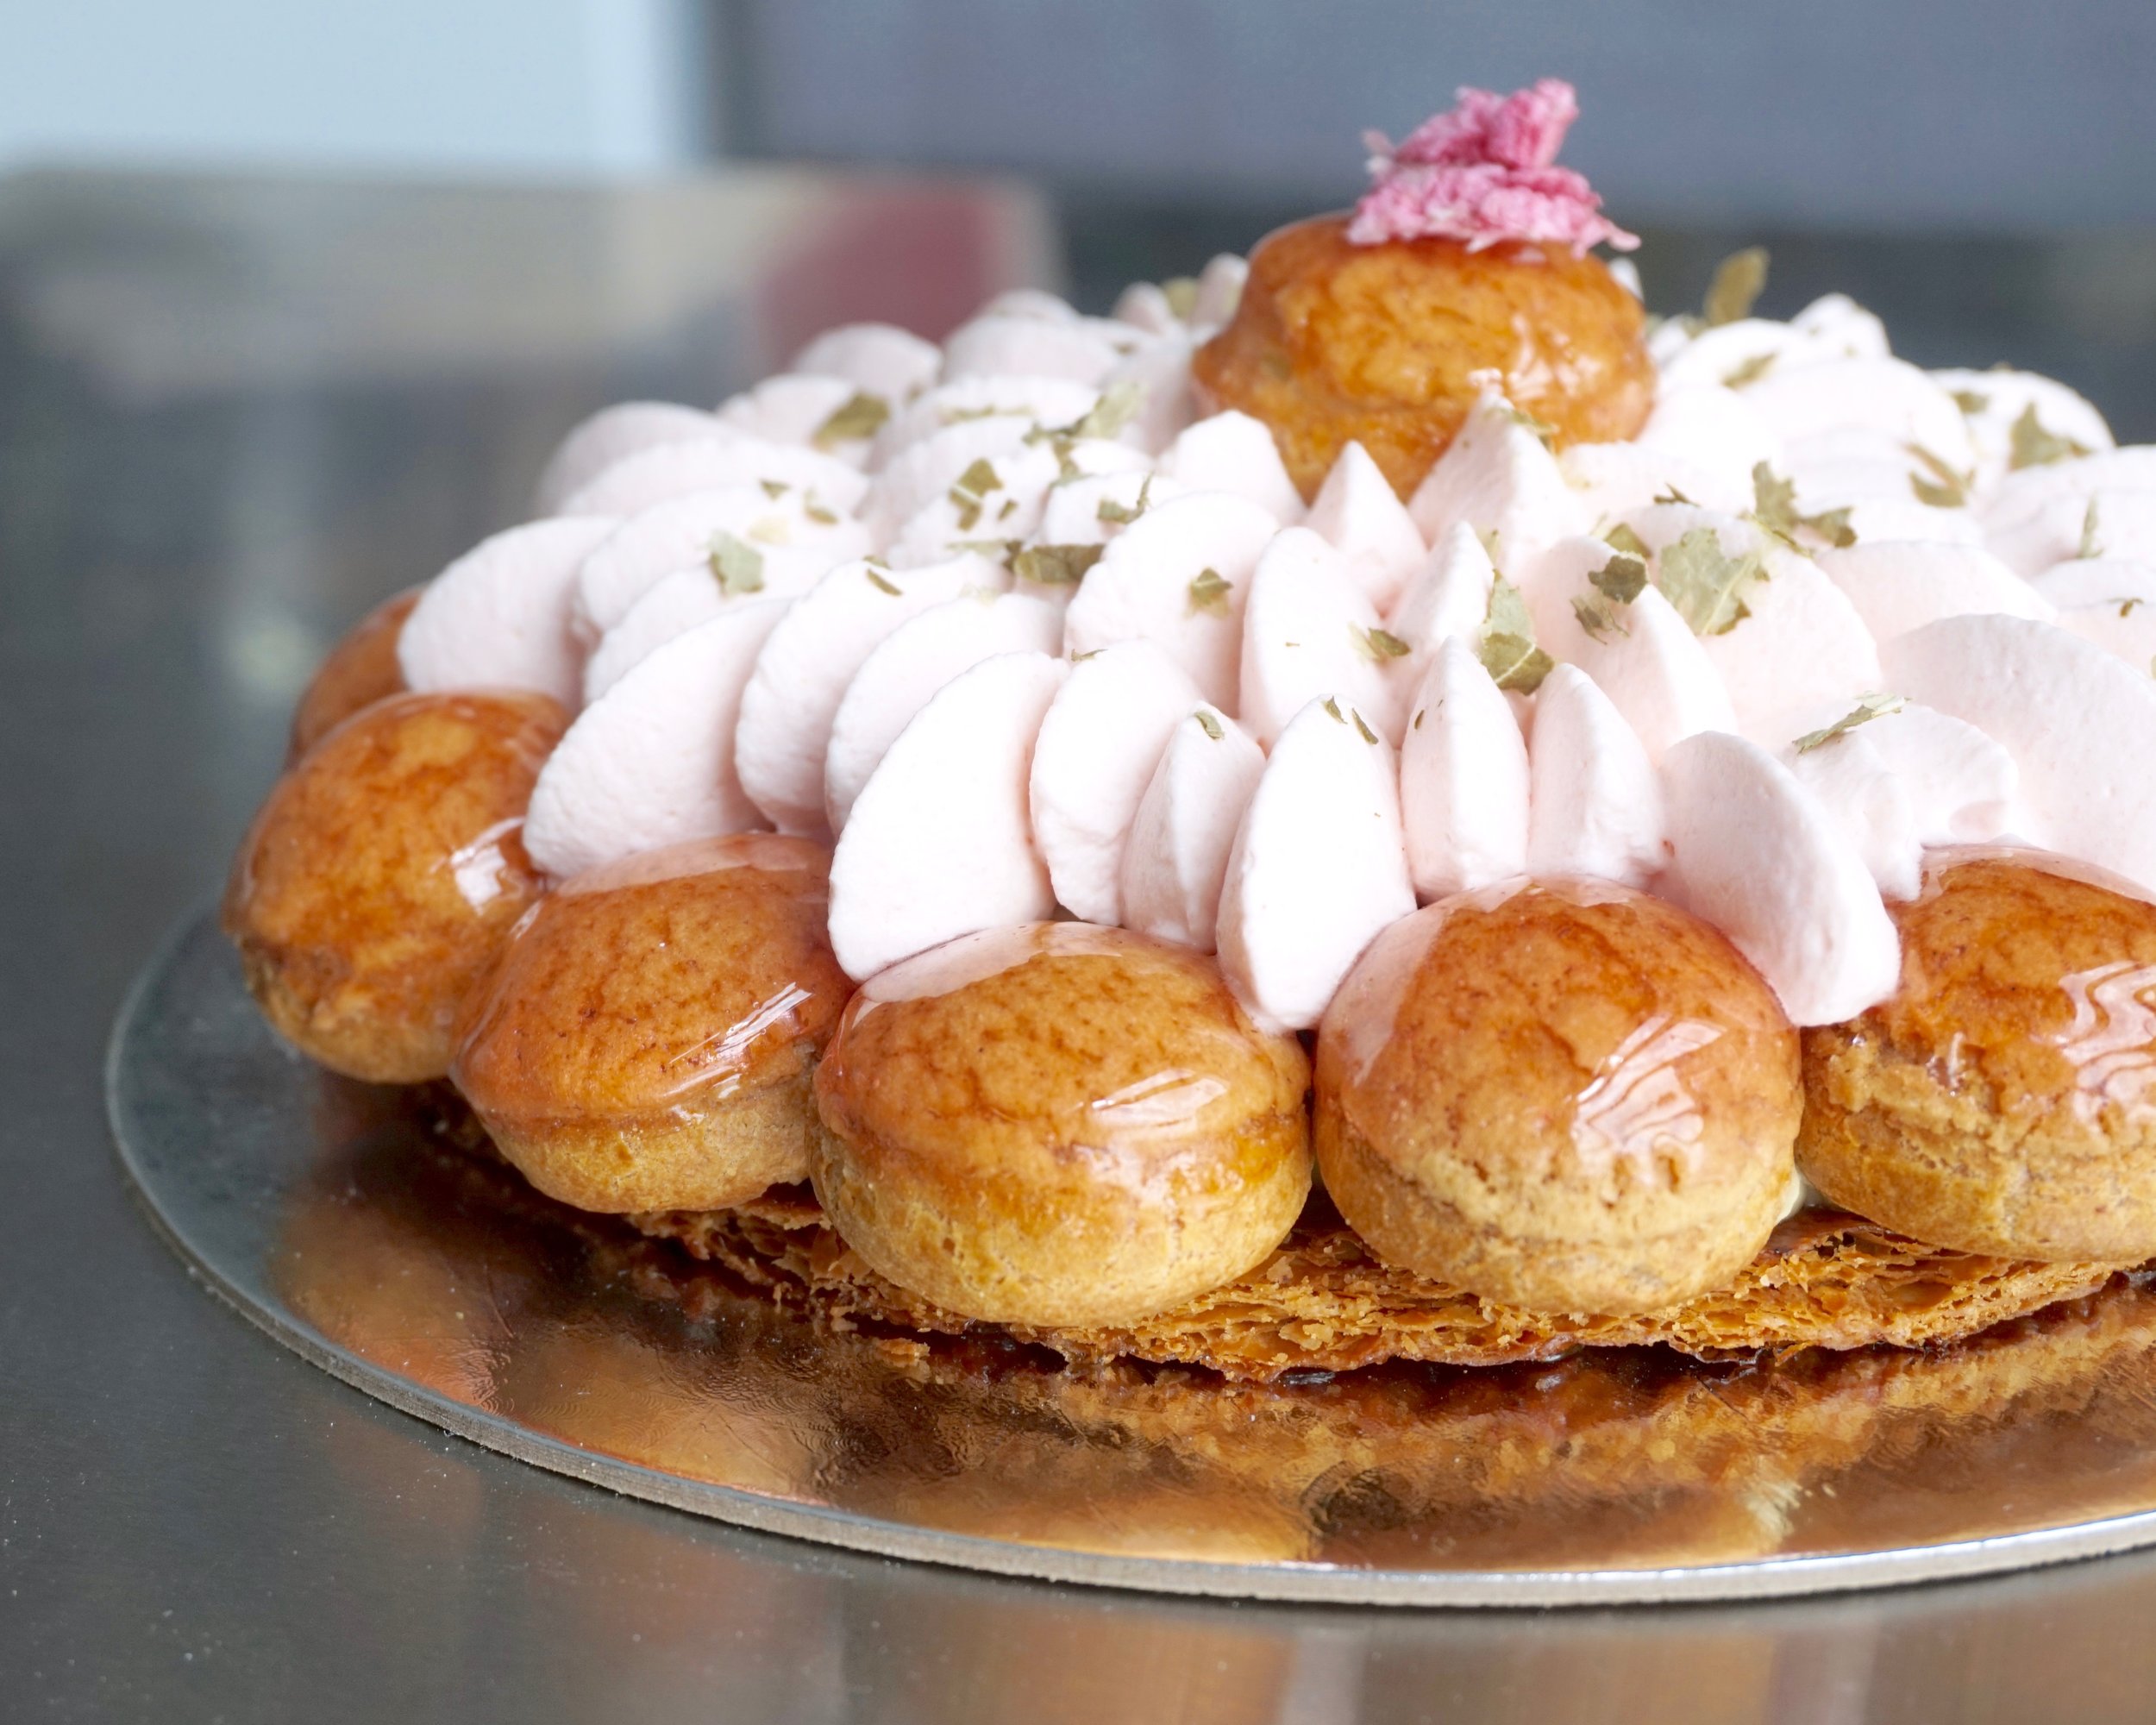 Cherry blossom dessert made by Gusta Cooking Studio